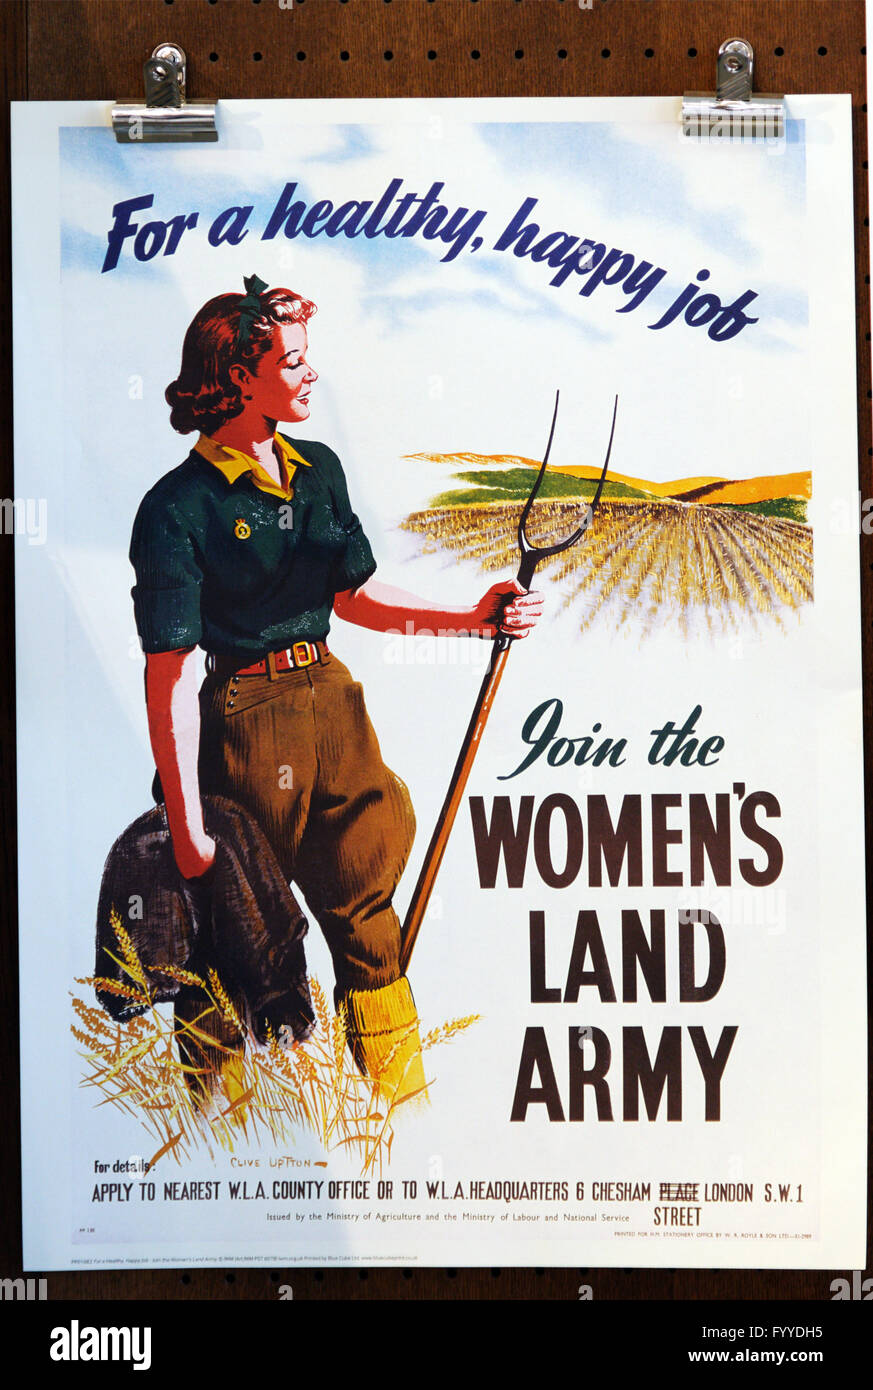 Second World War Women's Land Army recruitment poster Stock Photo